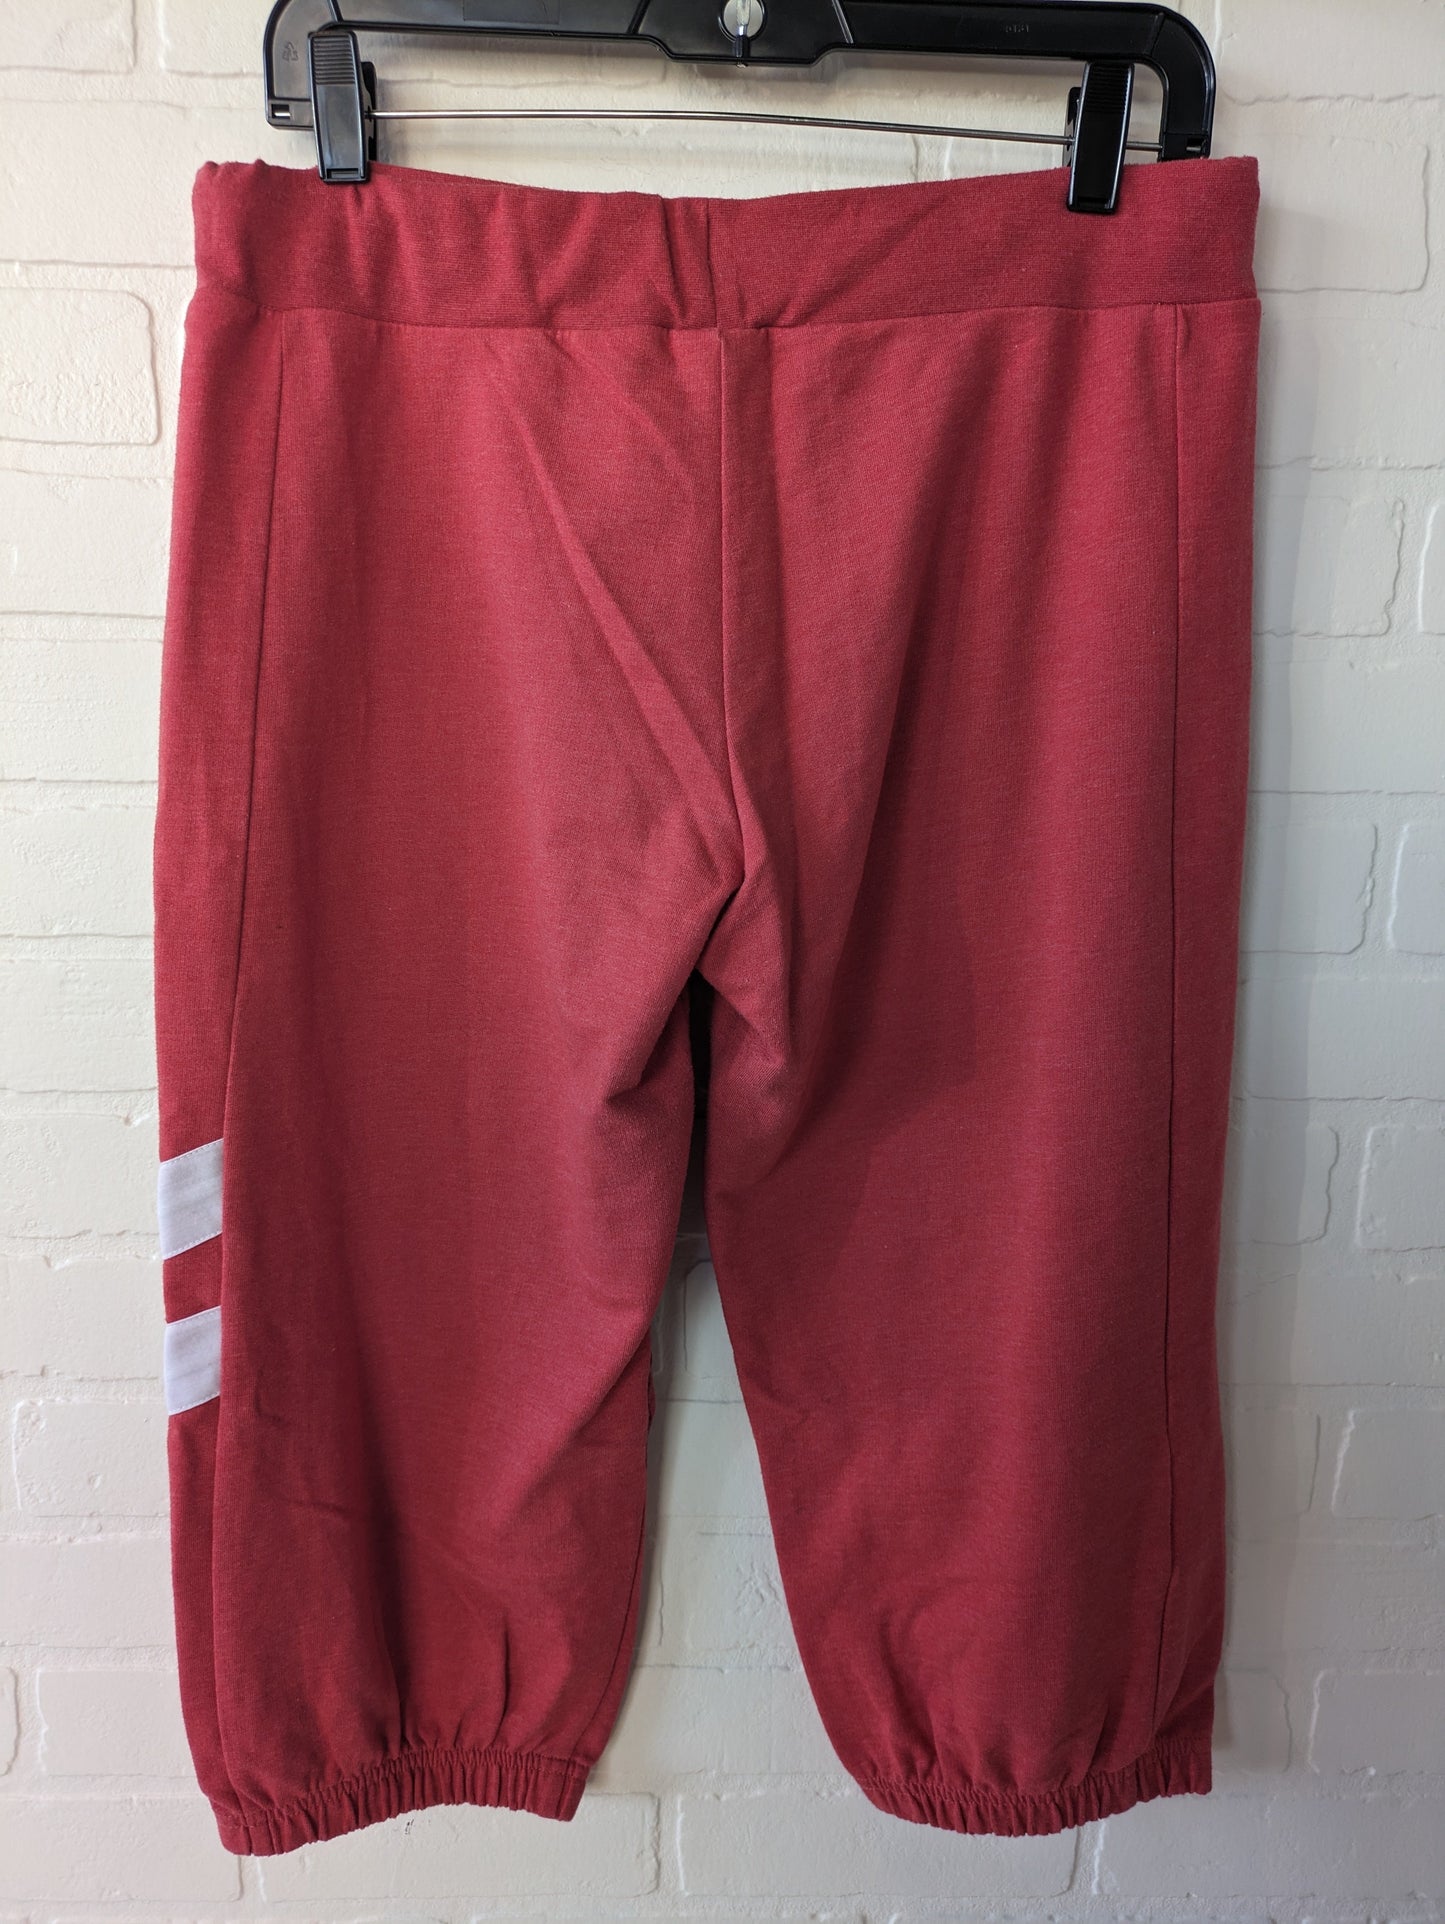 Pants Sweatpants By Cmc  Size: 12